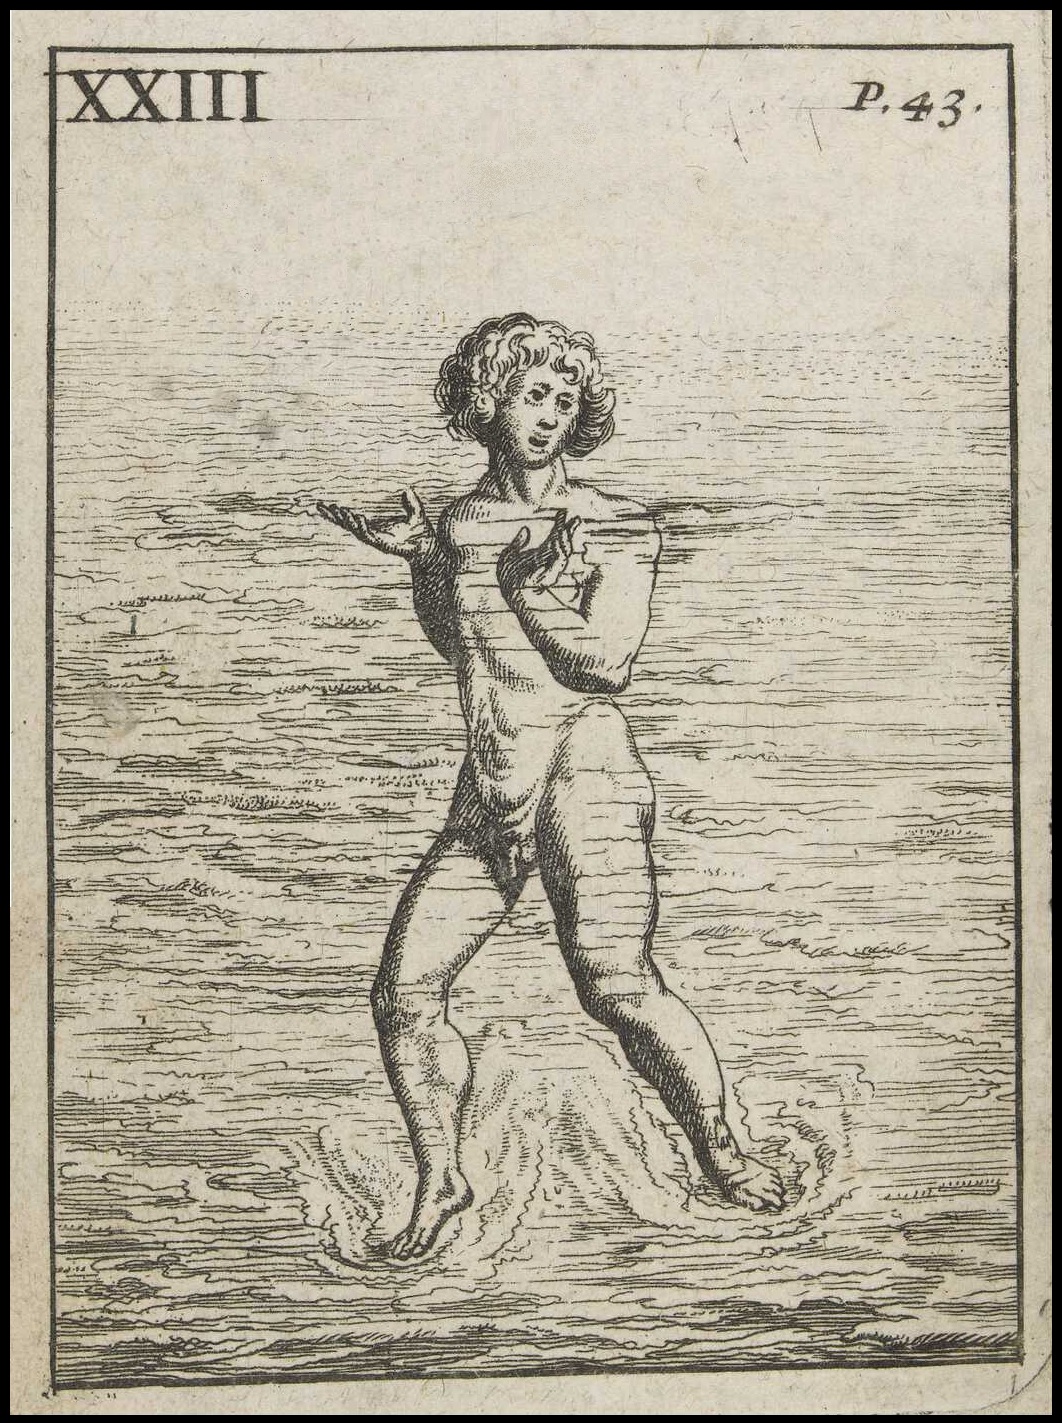 crude woodcut of swimmer treading water